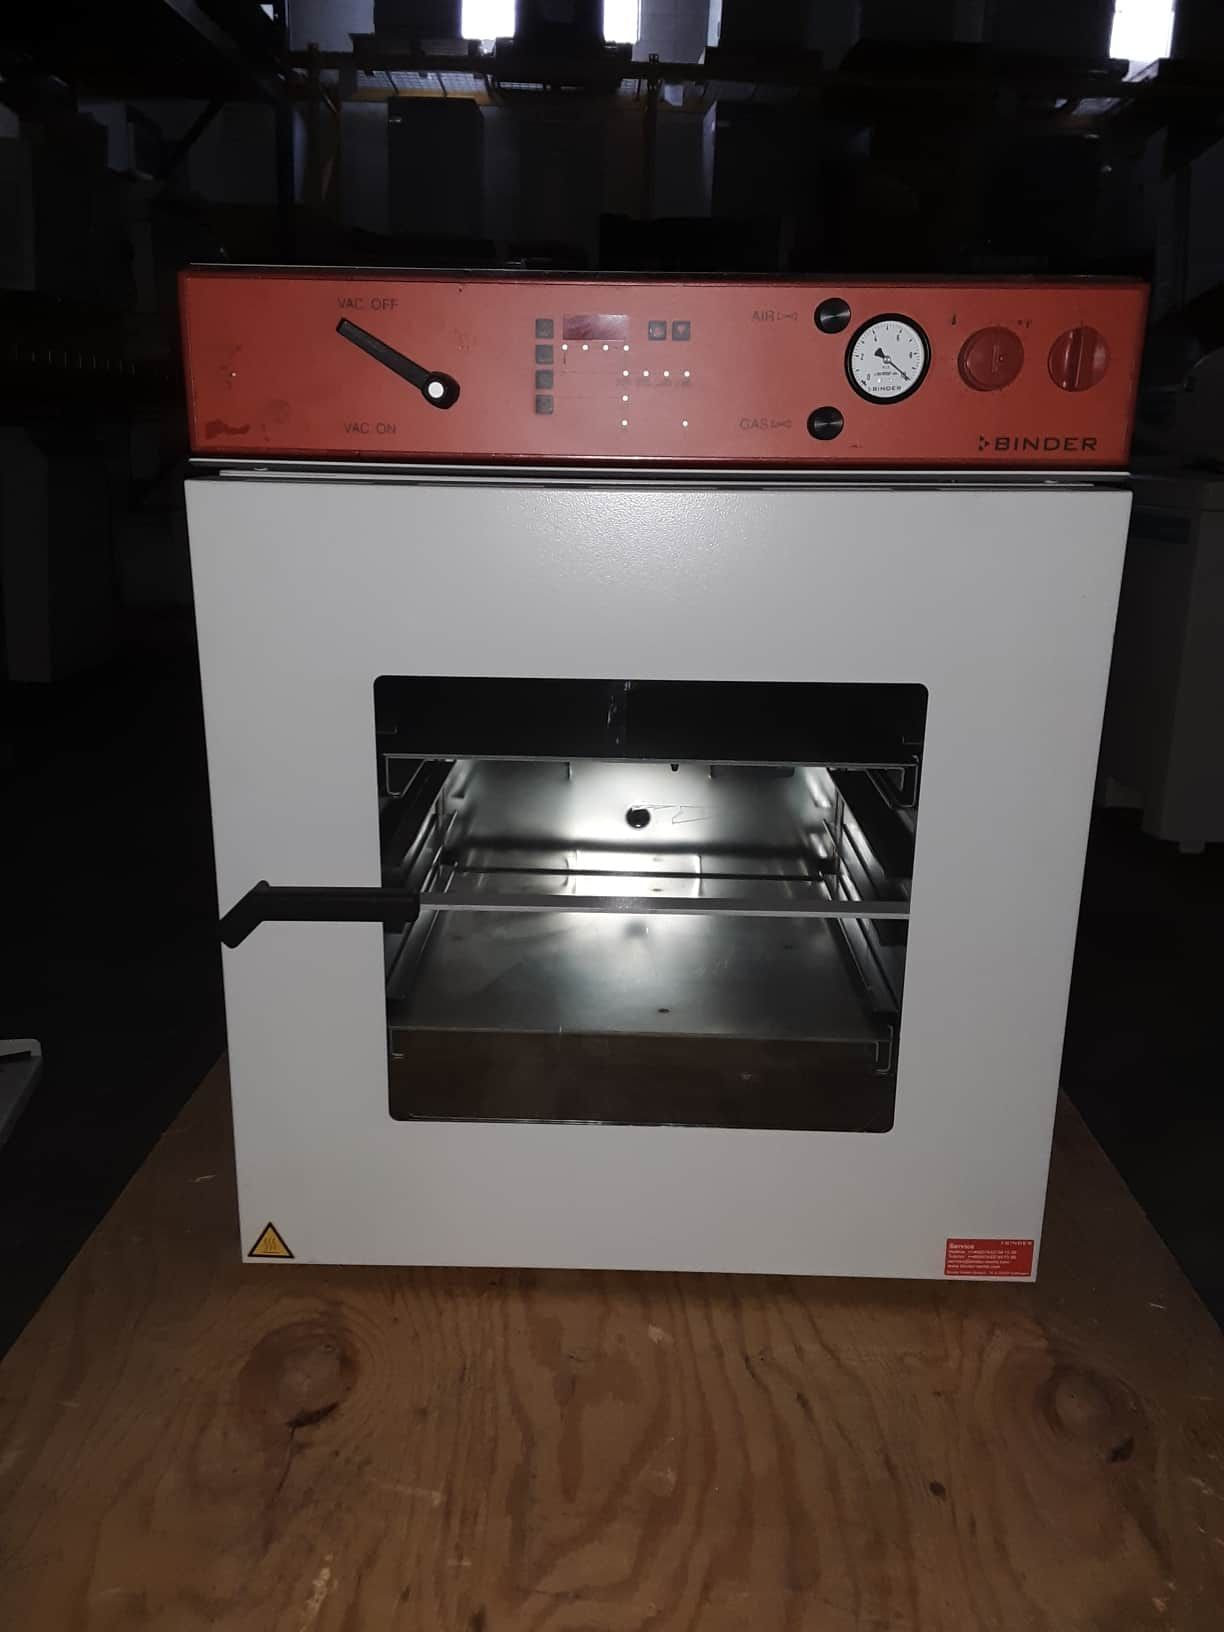 Binder VD-115 vacuum oven, 4.1 cubic foot capacity